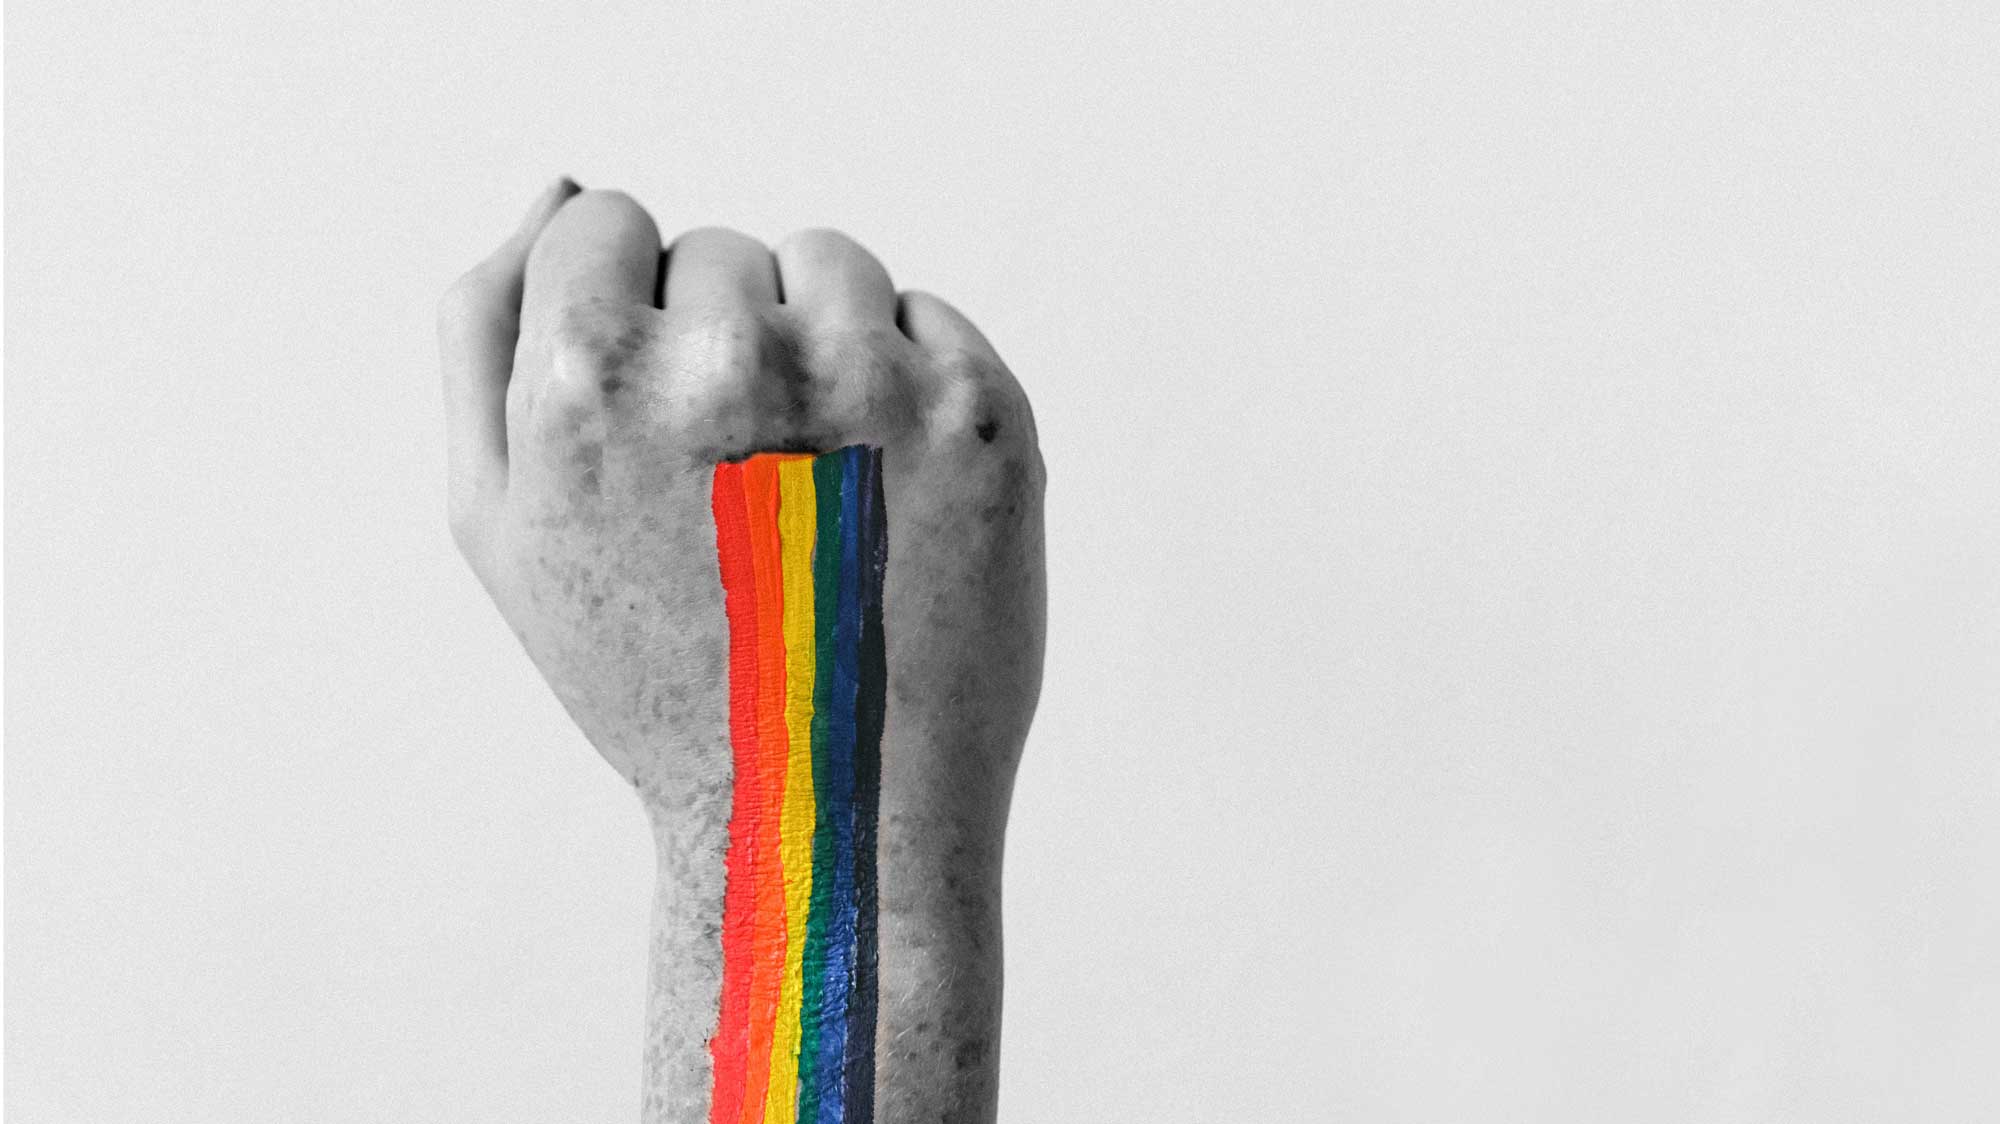 Good news: Die Errungenschaften der queeren Gemeinschaft